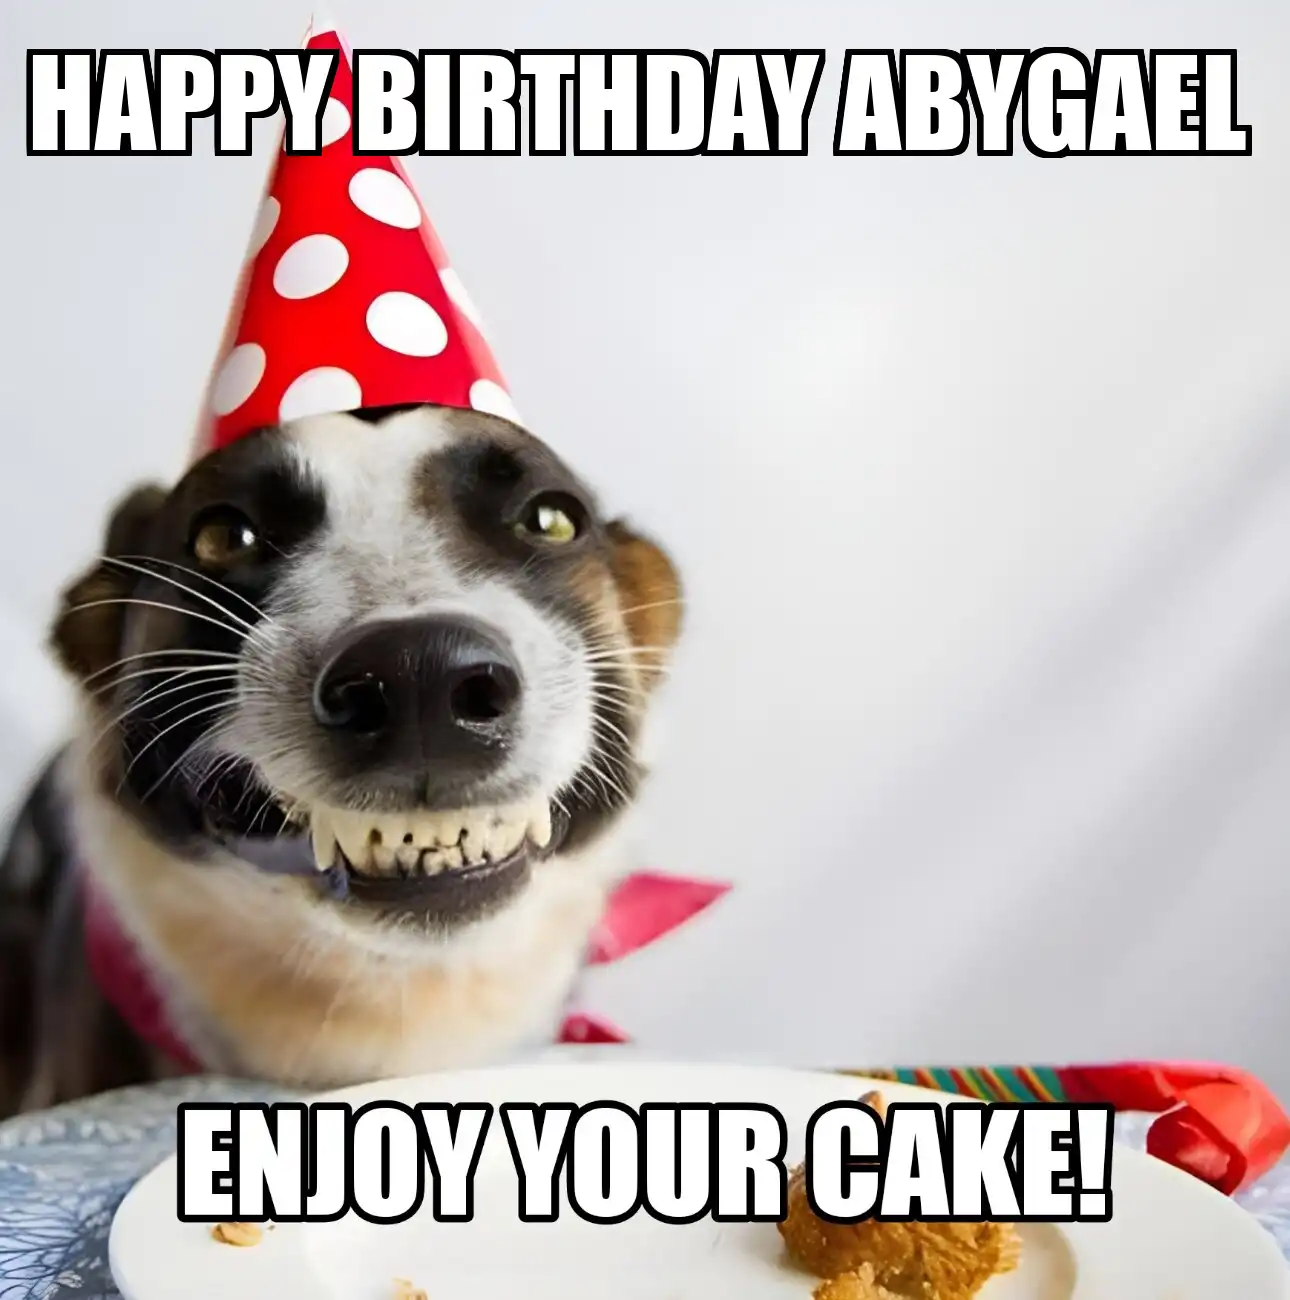 Happy Birthday Abygael Enjoy Your Cake Dog Meme